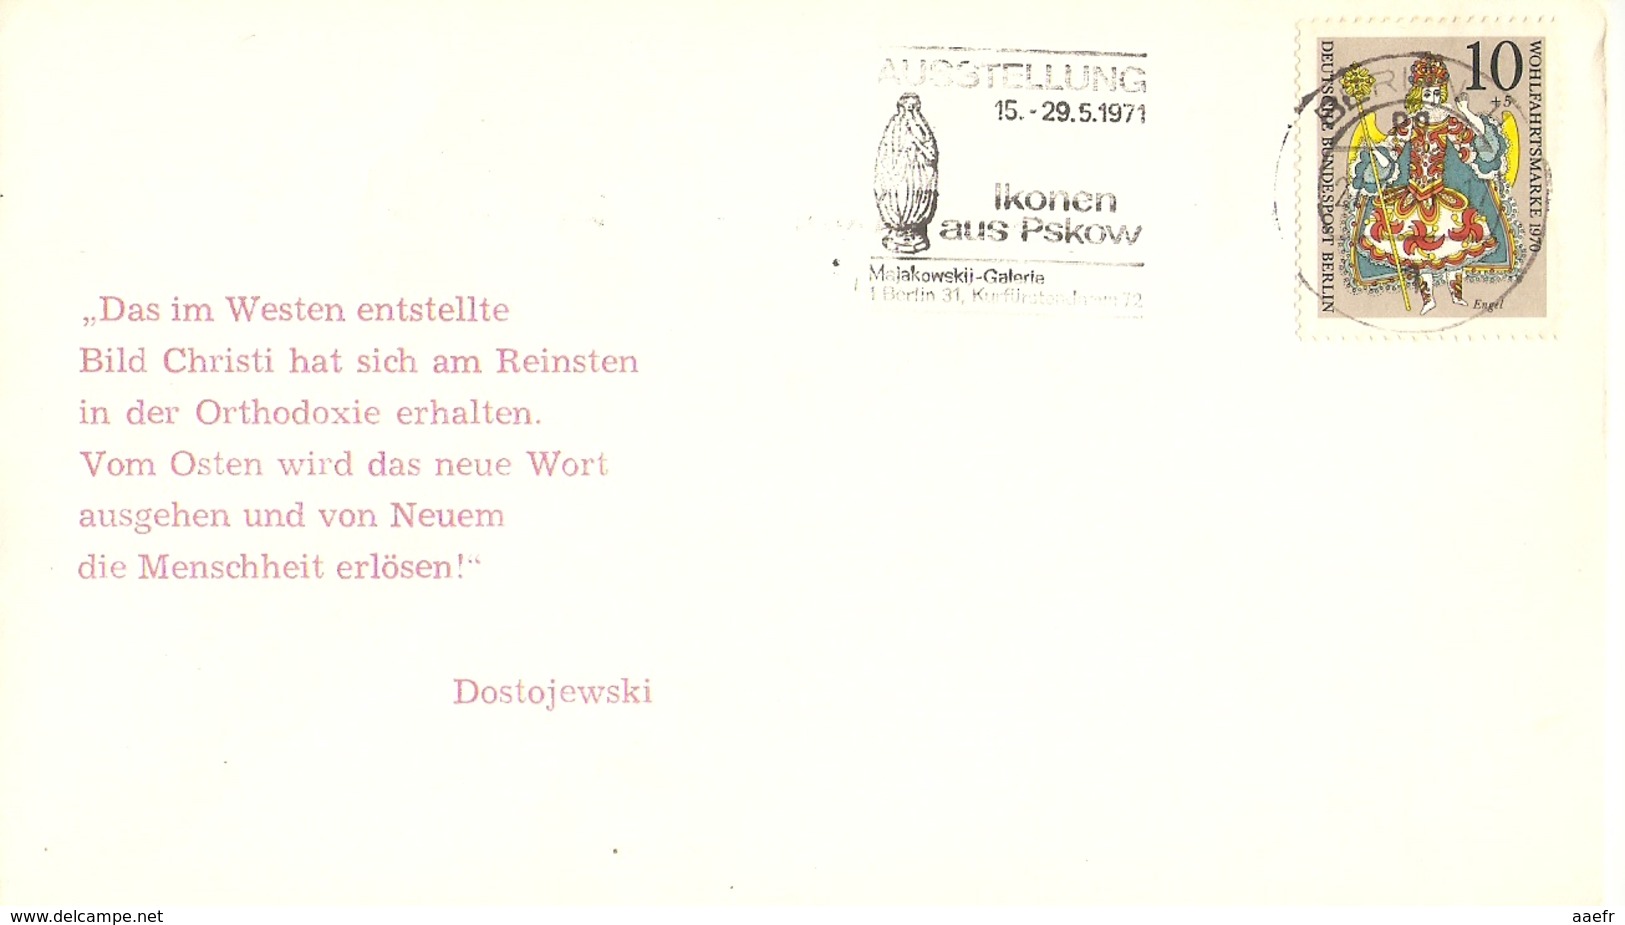 Allemagne Berlin 1971 - Enveloppe Avec Flamme Ausstellung Ikonen Aus Pskow - Citation Dostoievski - YT 374 - Lettres & Documents